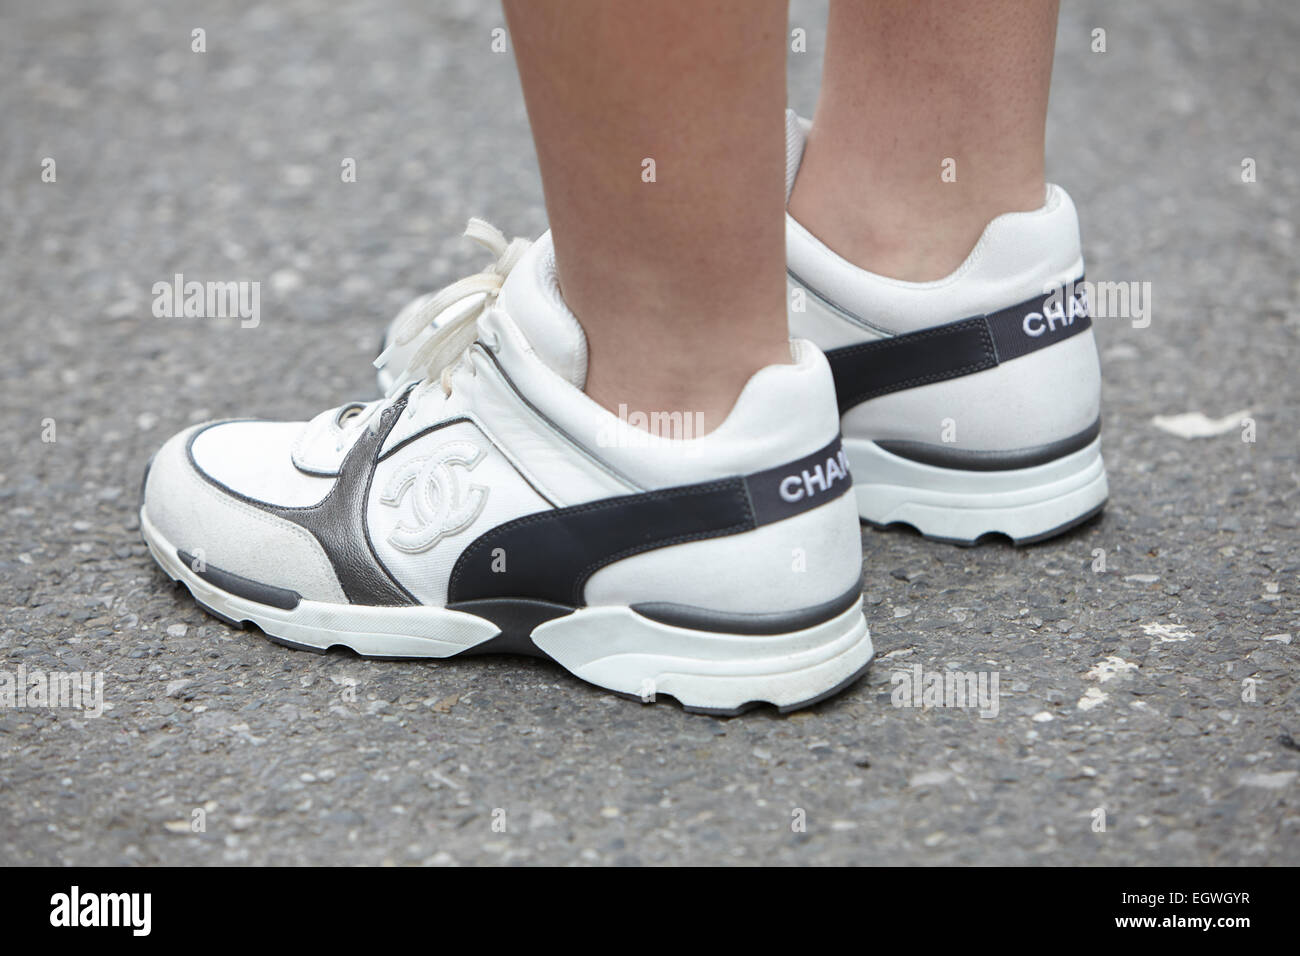 coco chanel women's sneakers